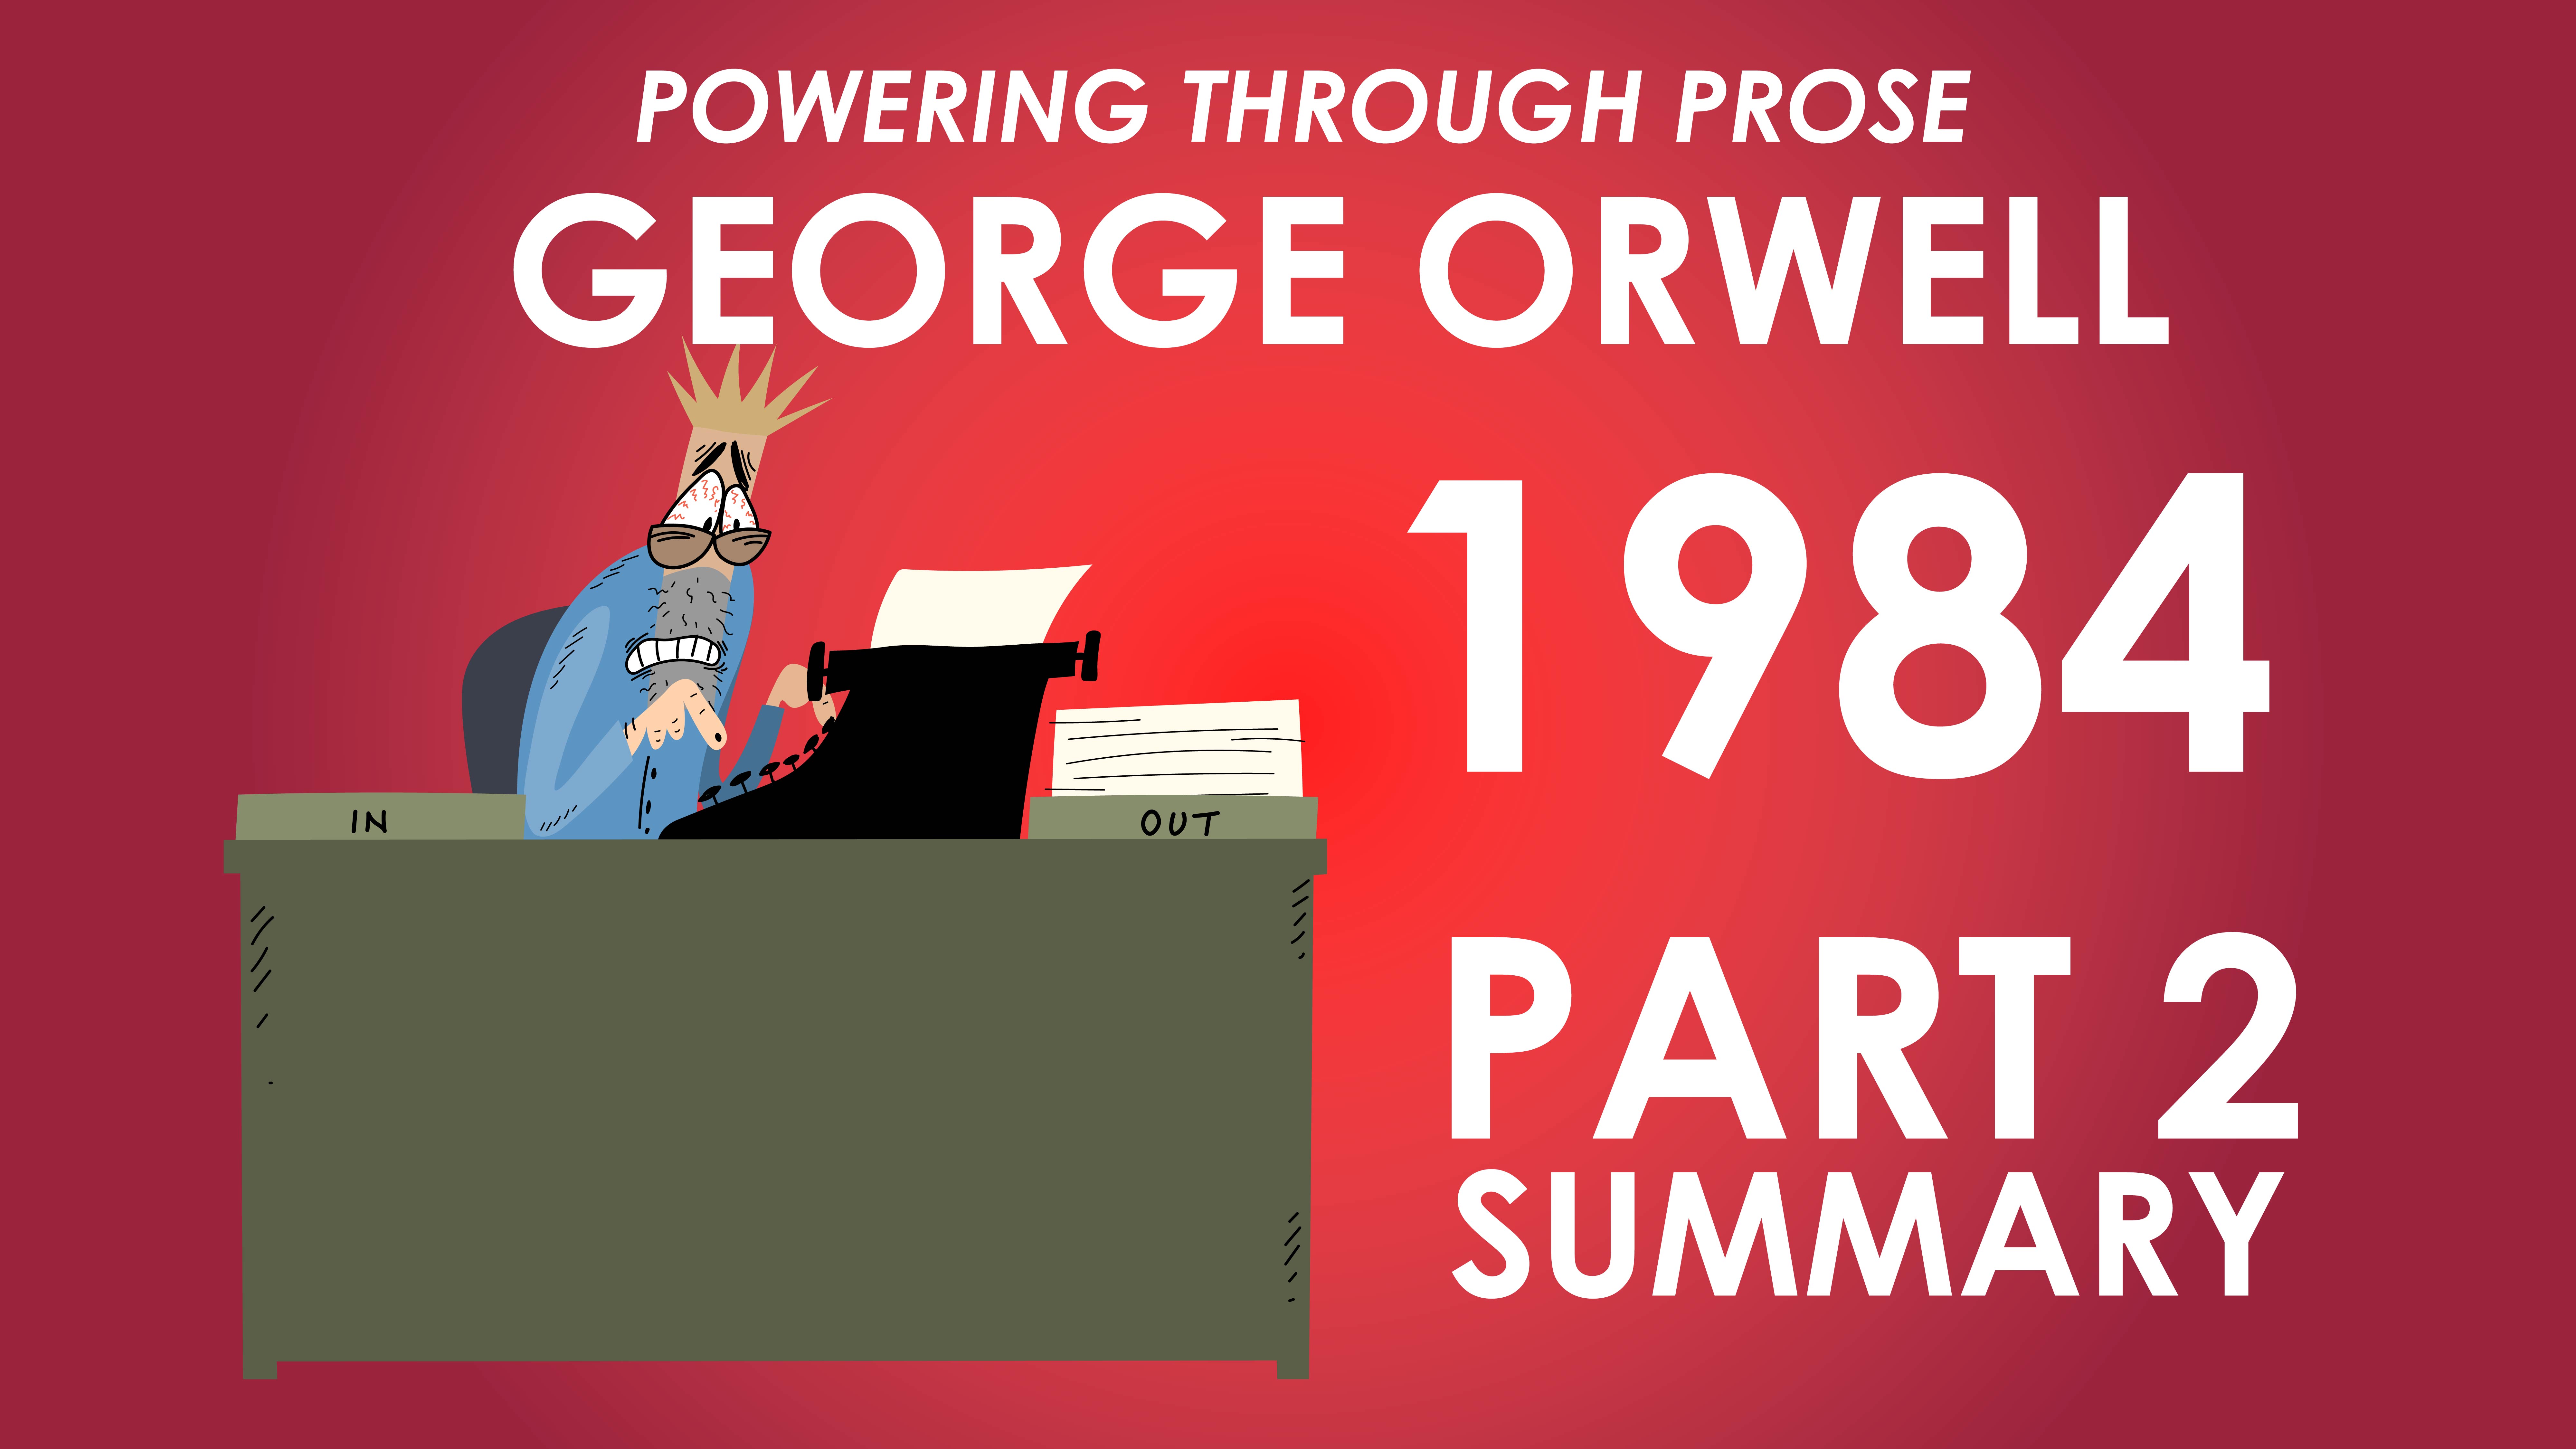 1984 - George Orwell - Part 2 Summary - Powering Through Prose Series